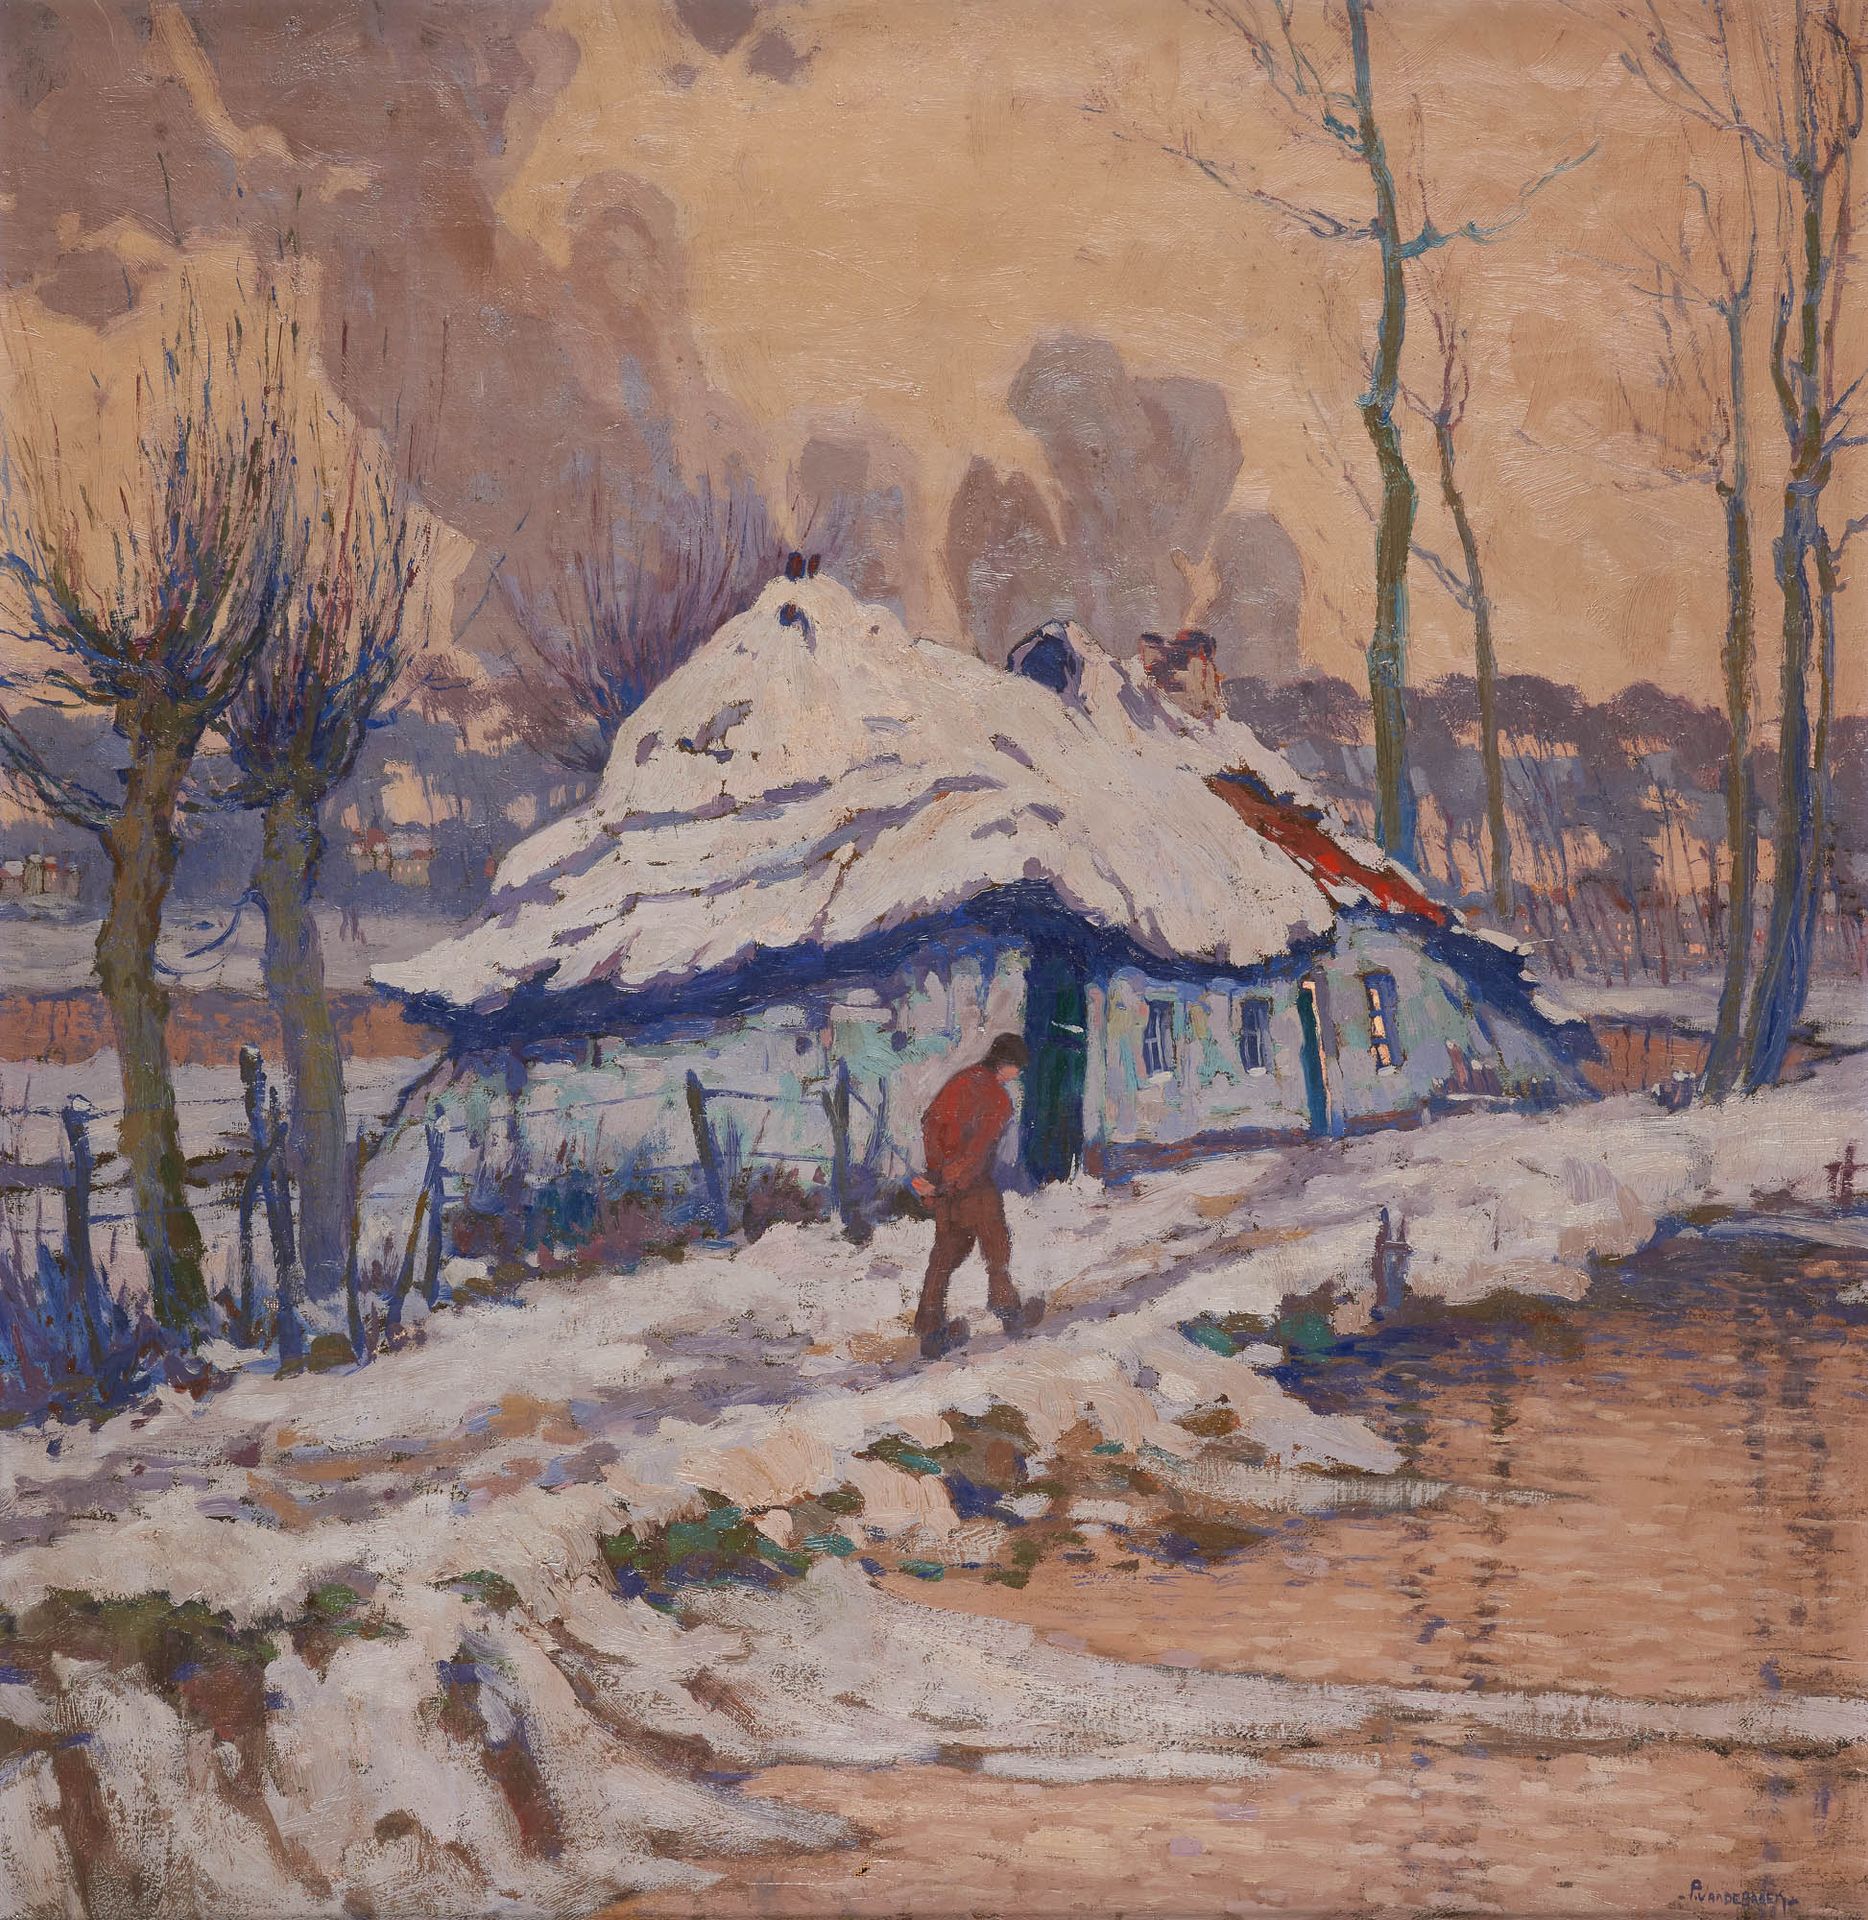 Pol VAN DE BROECK École belge (1887-1927) Óleo sobre lienzo: "Efecto nieve".

Fi&hellip;